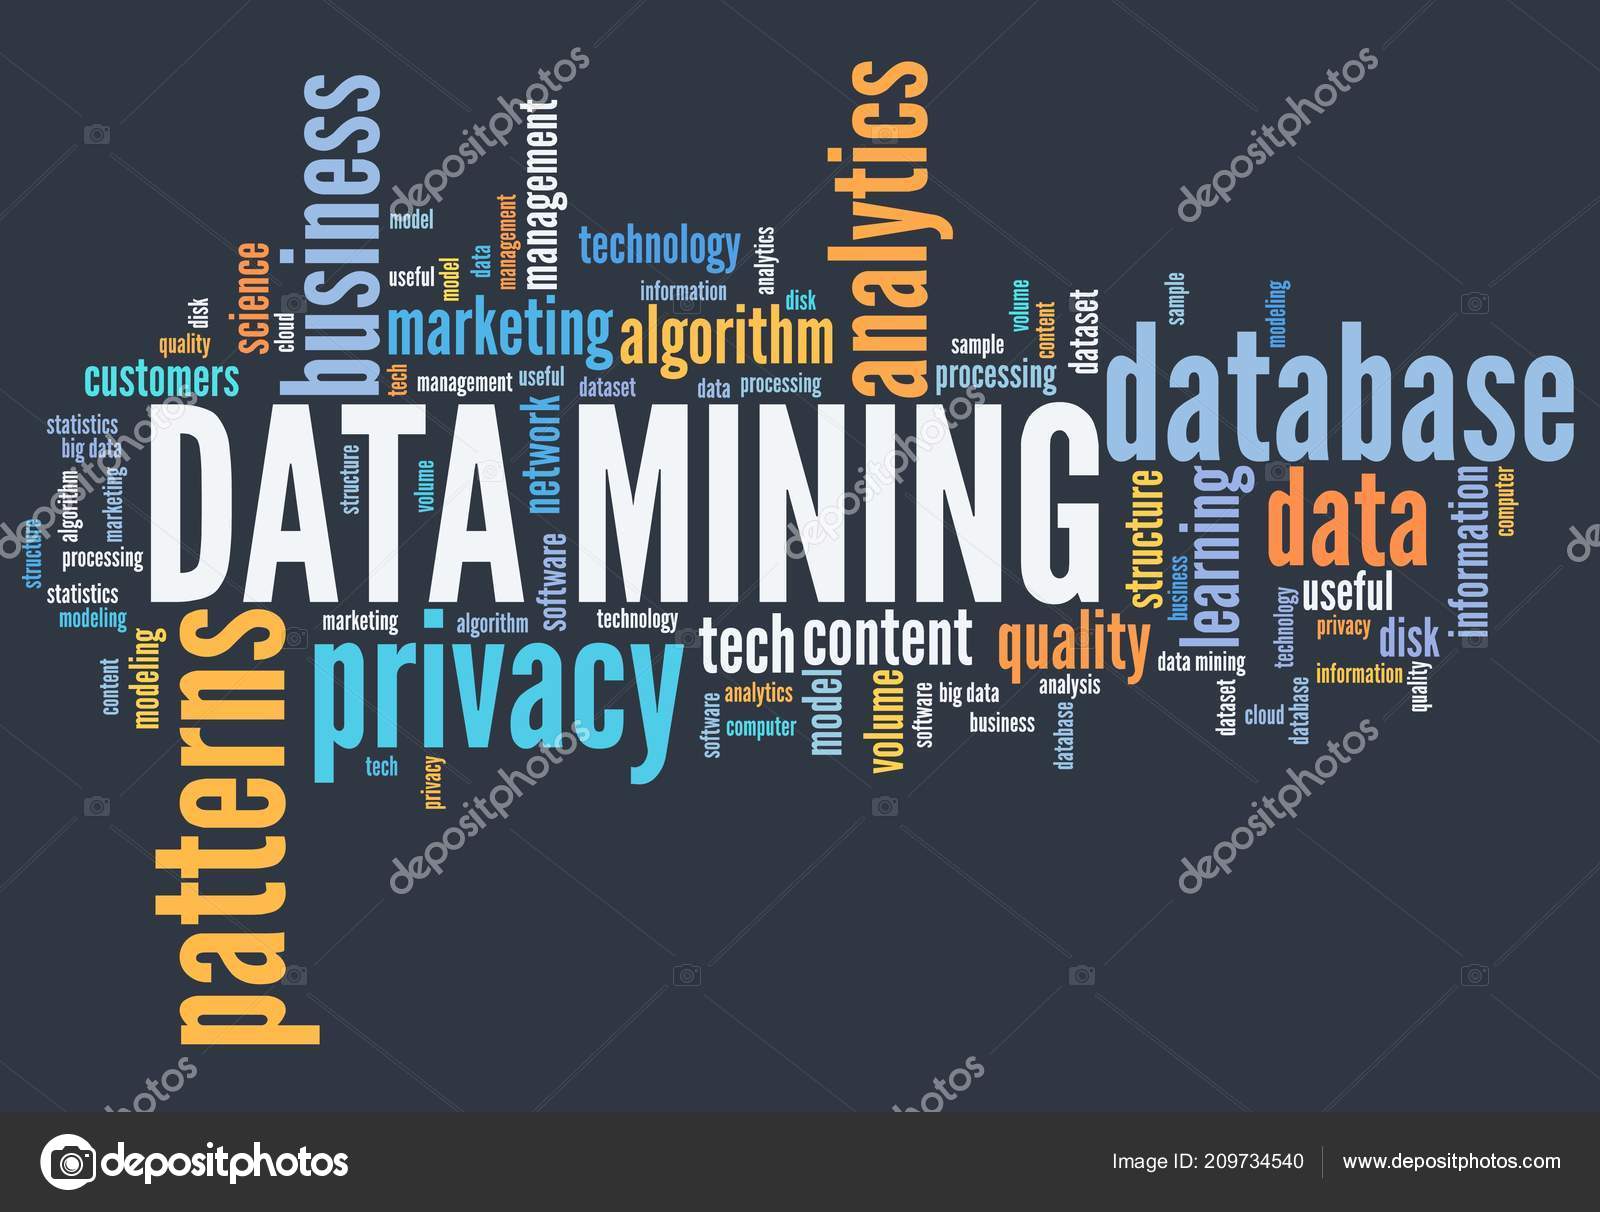 Online data mining